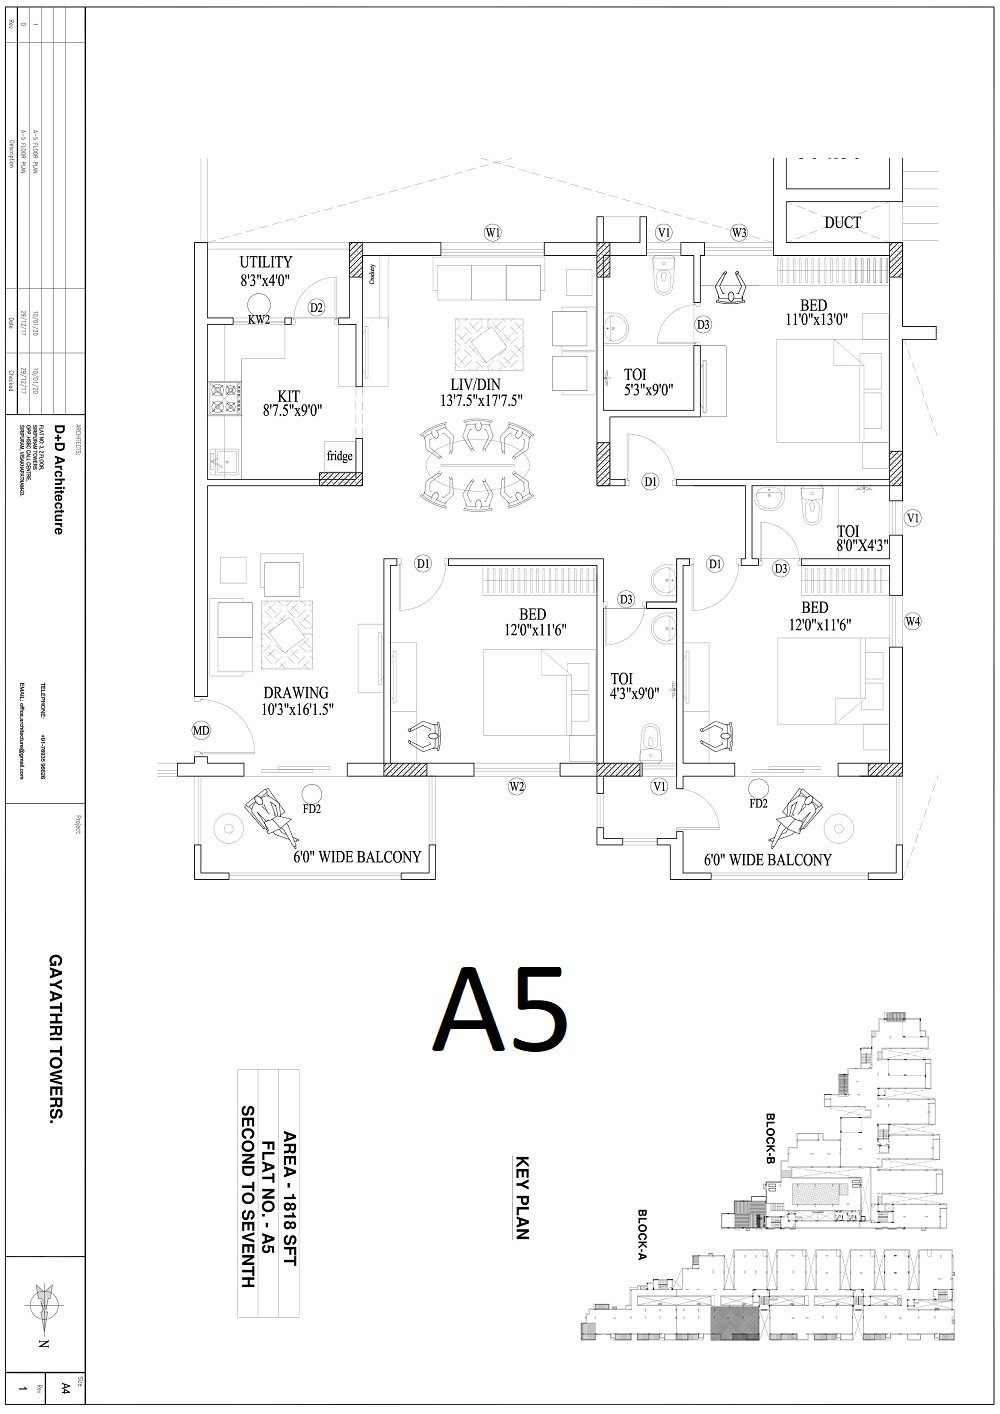 A5 - Tipcal Floor Plan